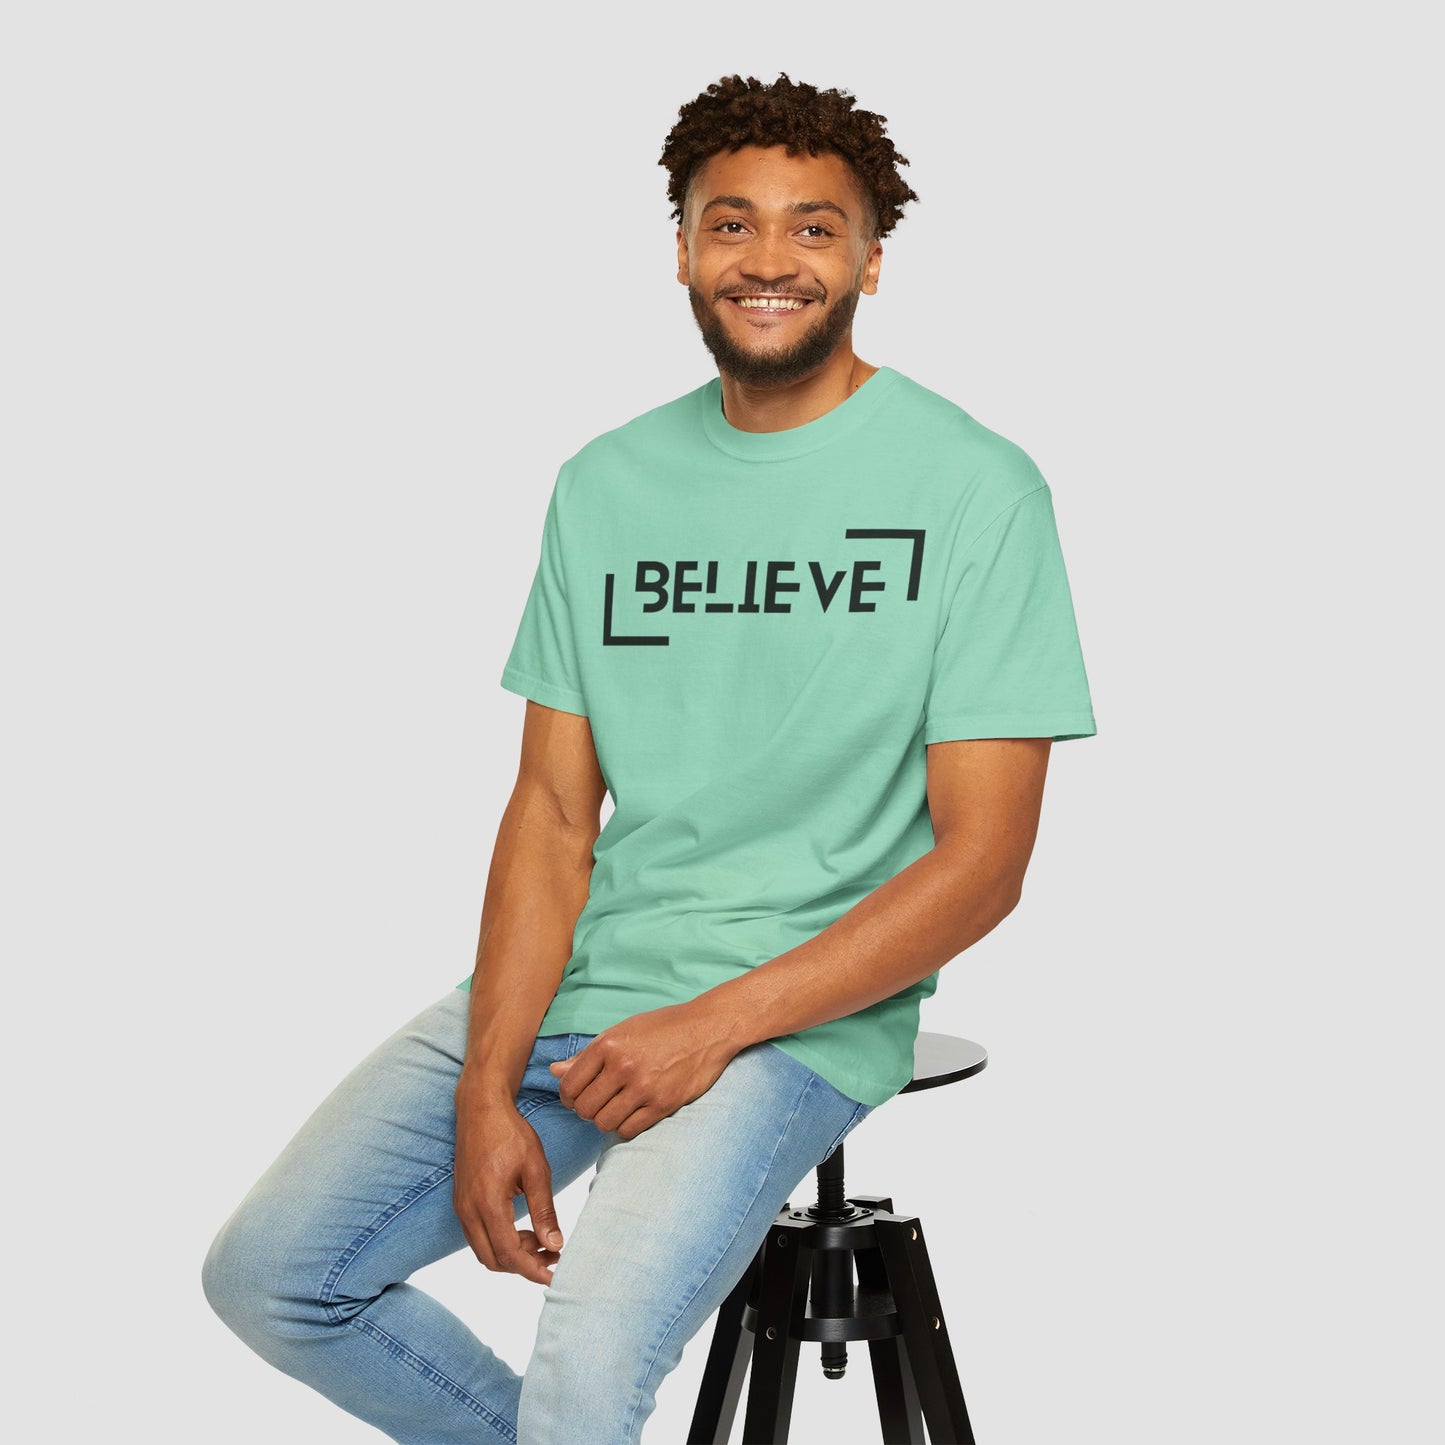 Positive Vibes Unisex T-shirt